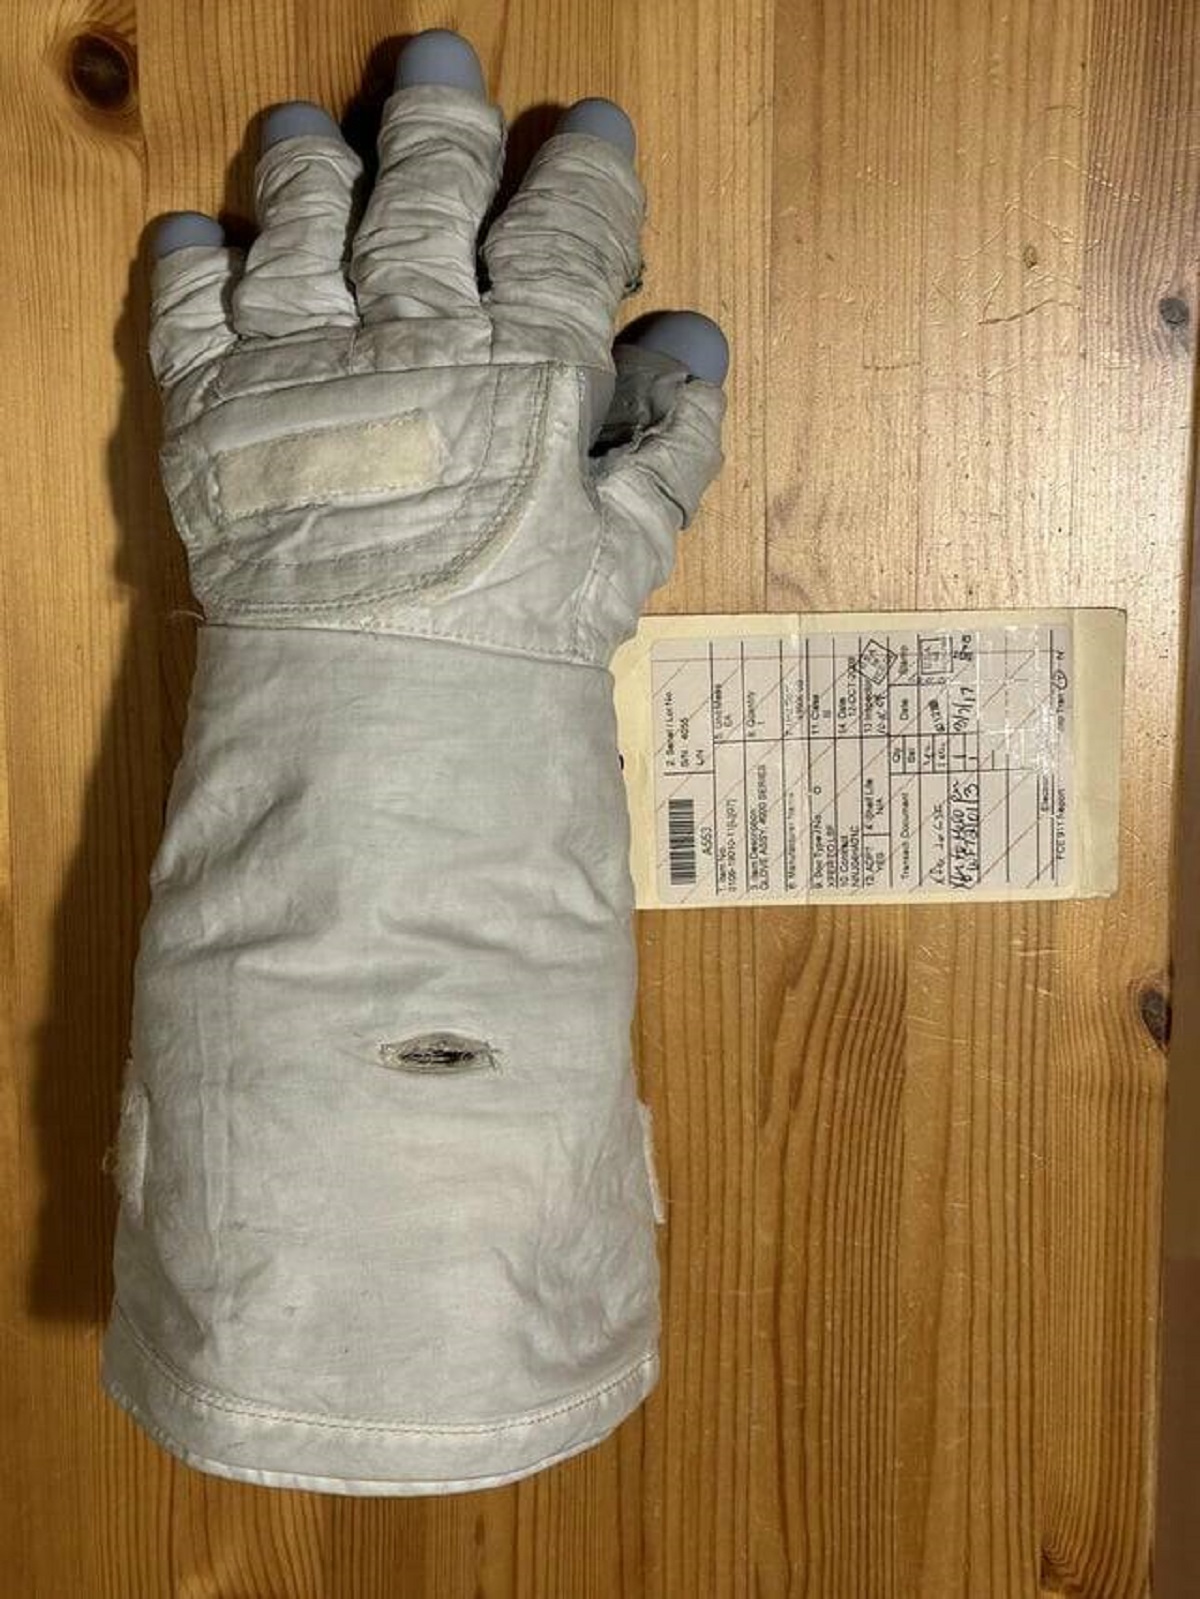 "NASA Series 4000 EMU Glove.$12,500 for one glove"